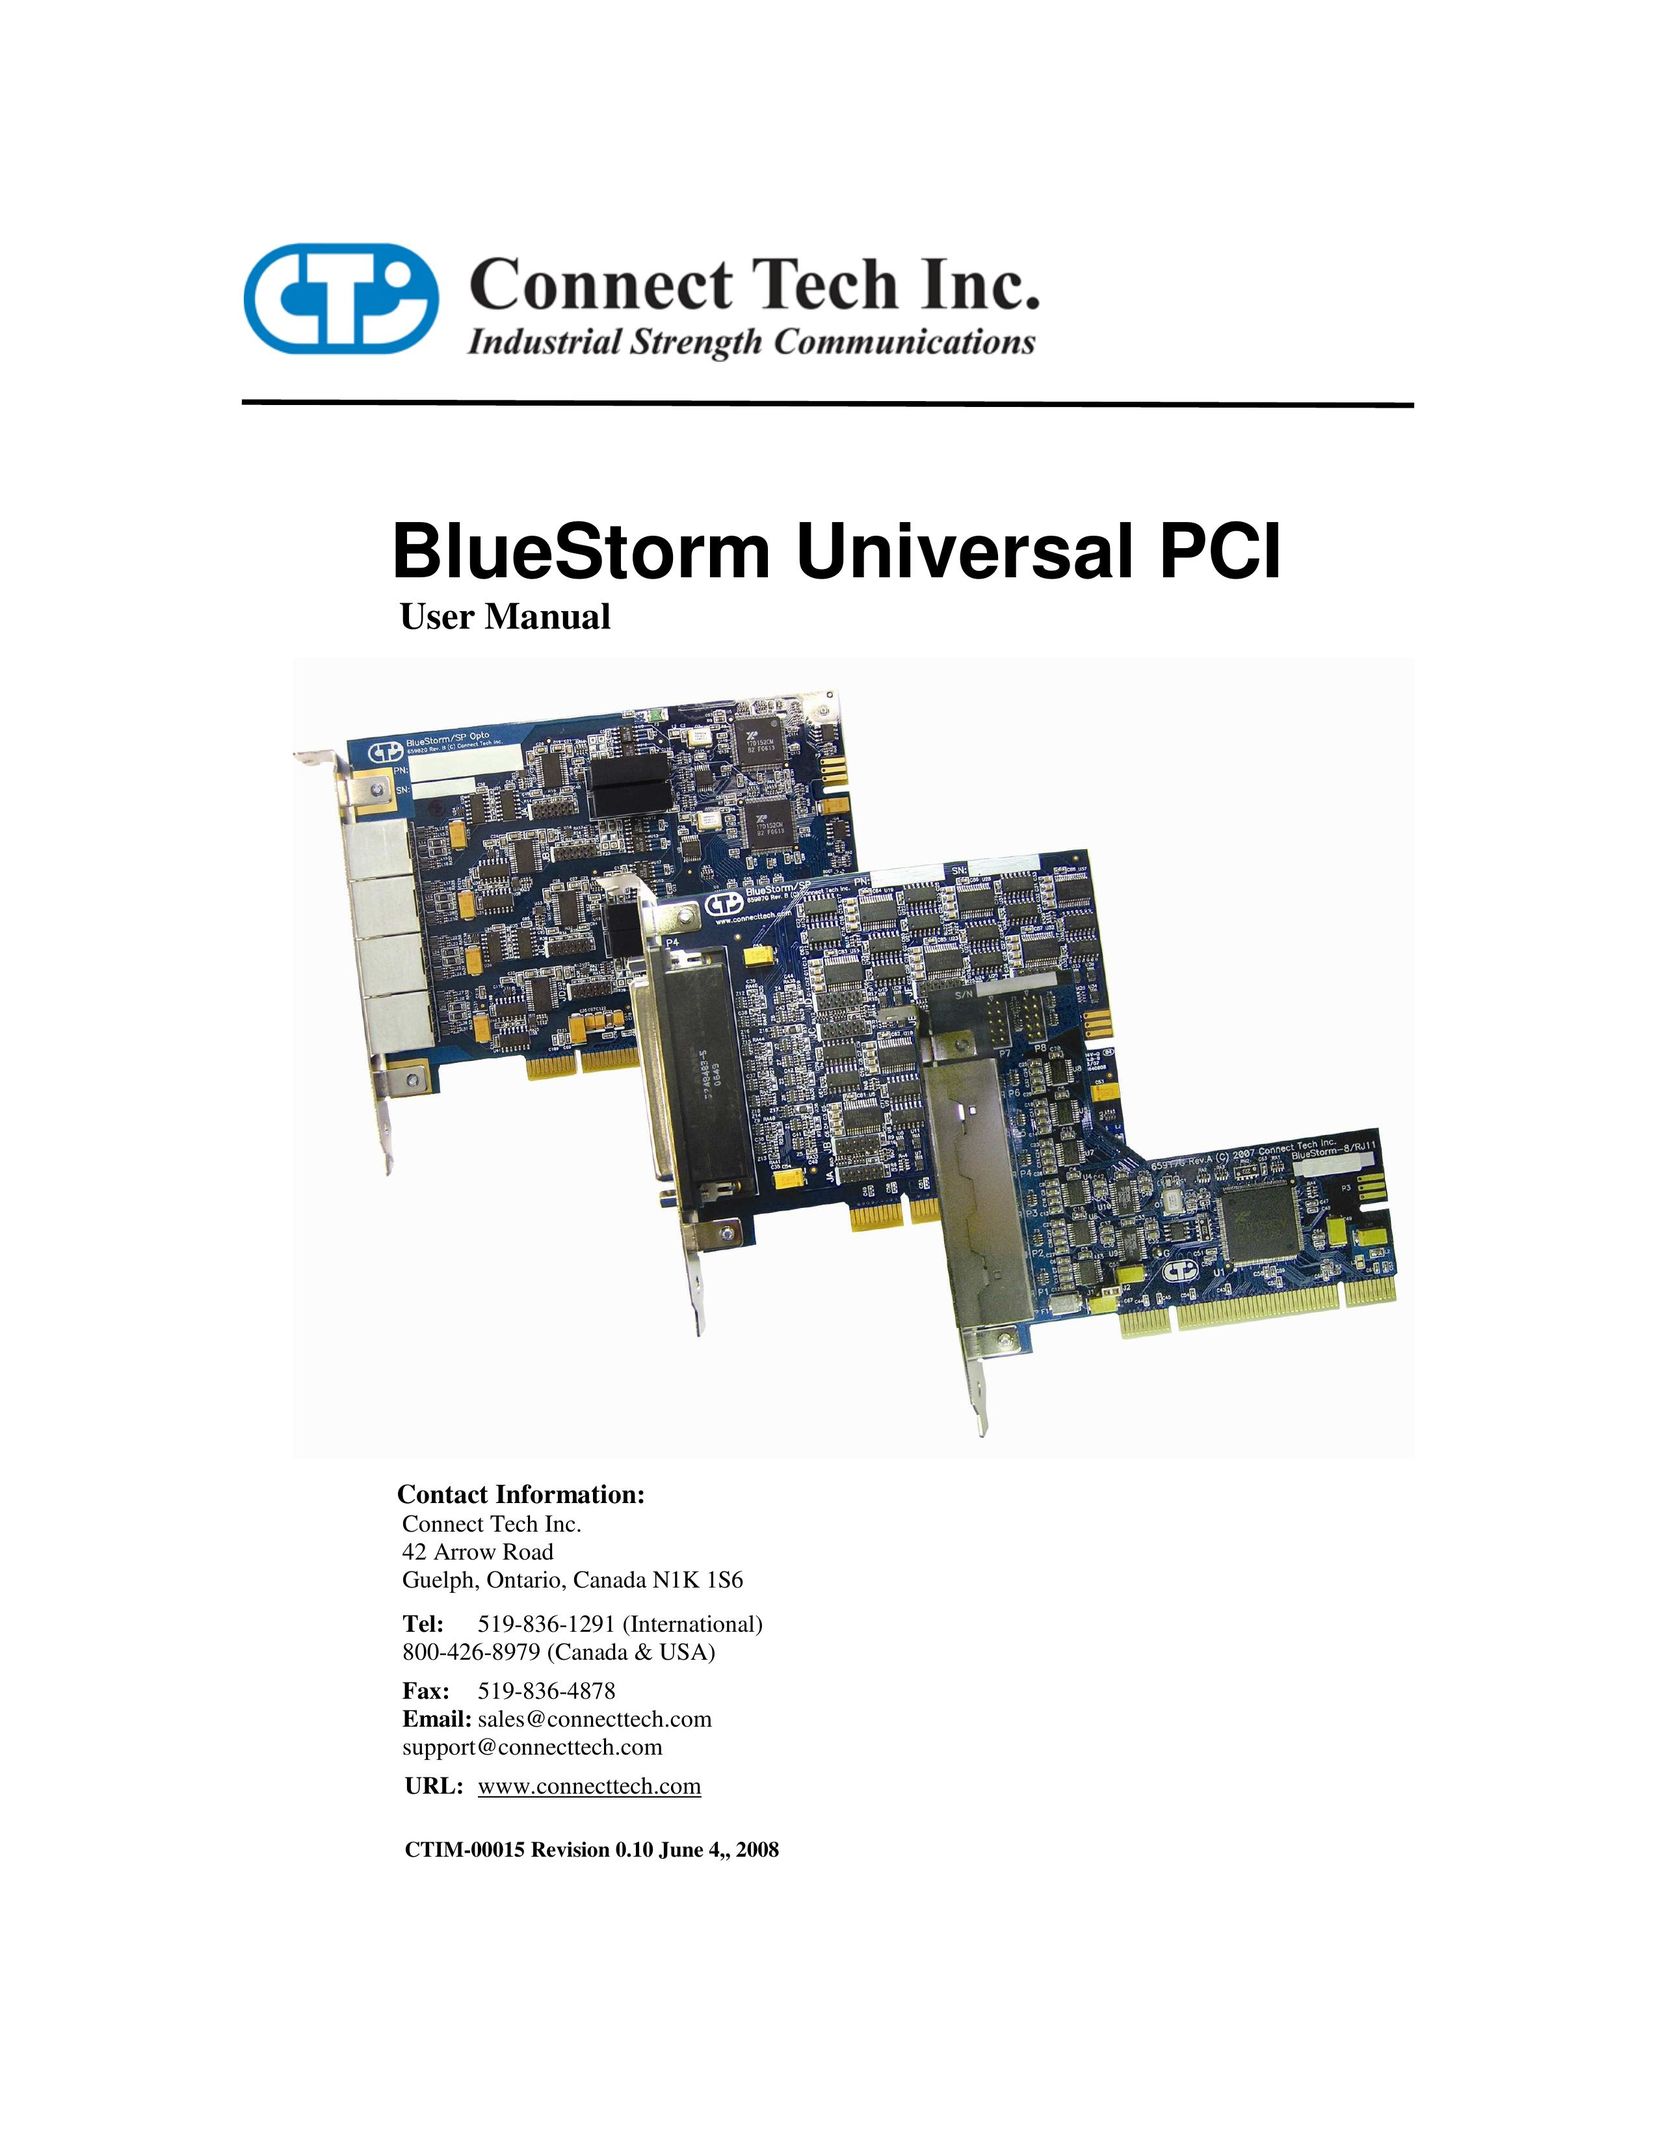 Connect Tech BlueStorm Universal PCI Electronic Accessory User Manual